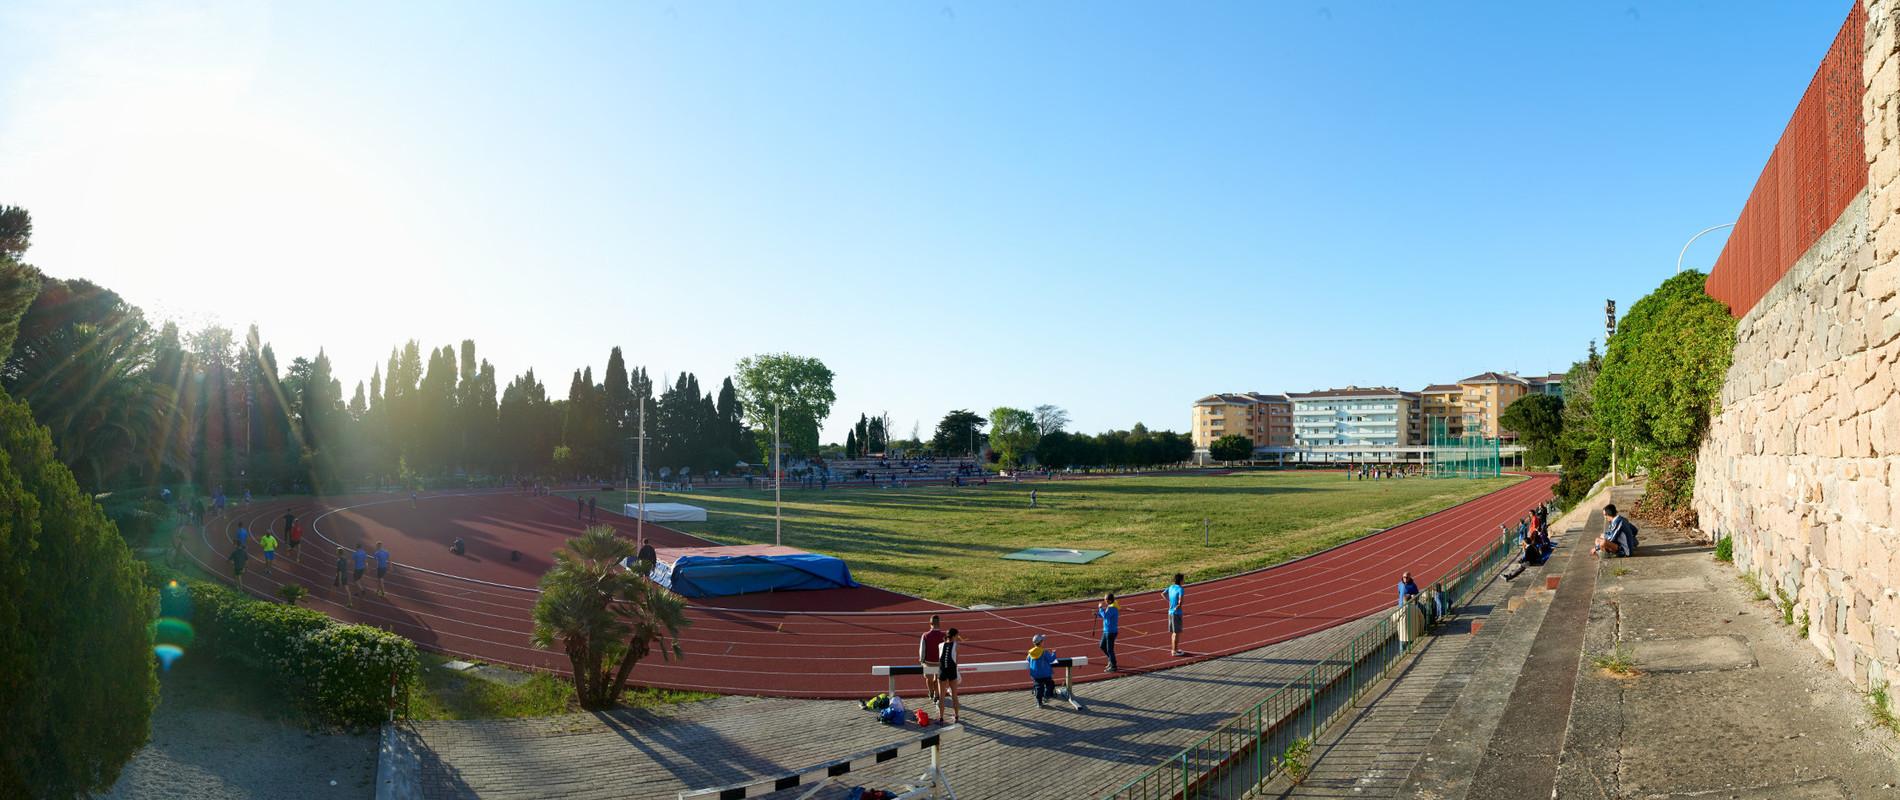 Stadion Dei Pini